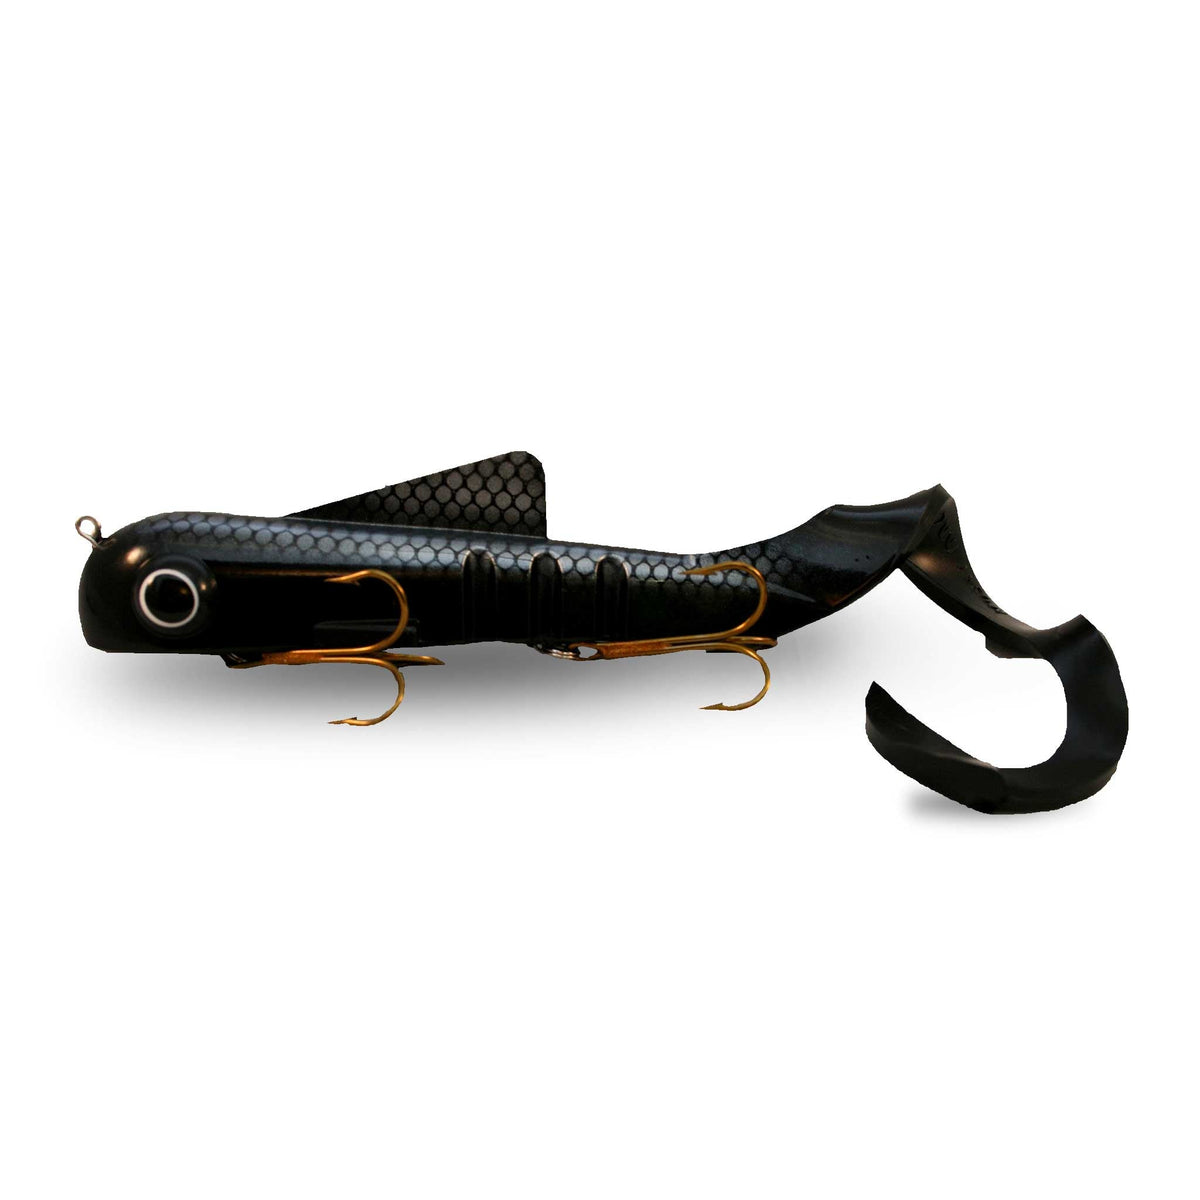 Spinpoler Big Pike Predator Soft Baits Fishing Lures 84g/20cm 40g/15.6cm 3D  River Roach Swimbait with Stinger Rig Hook/pack